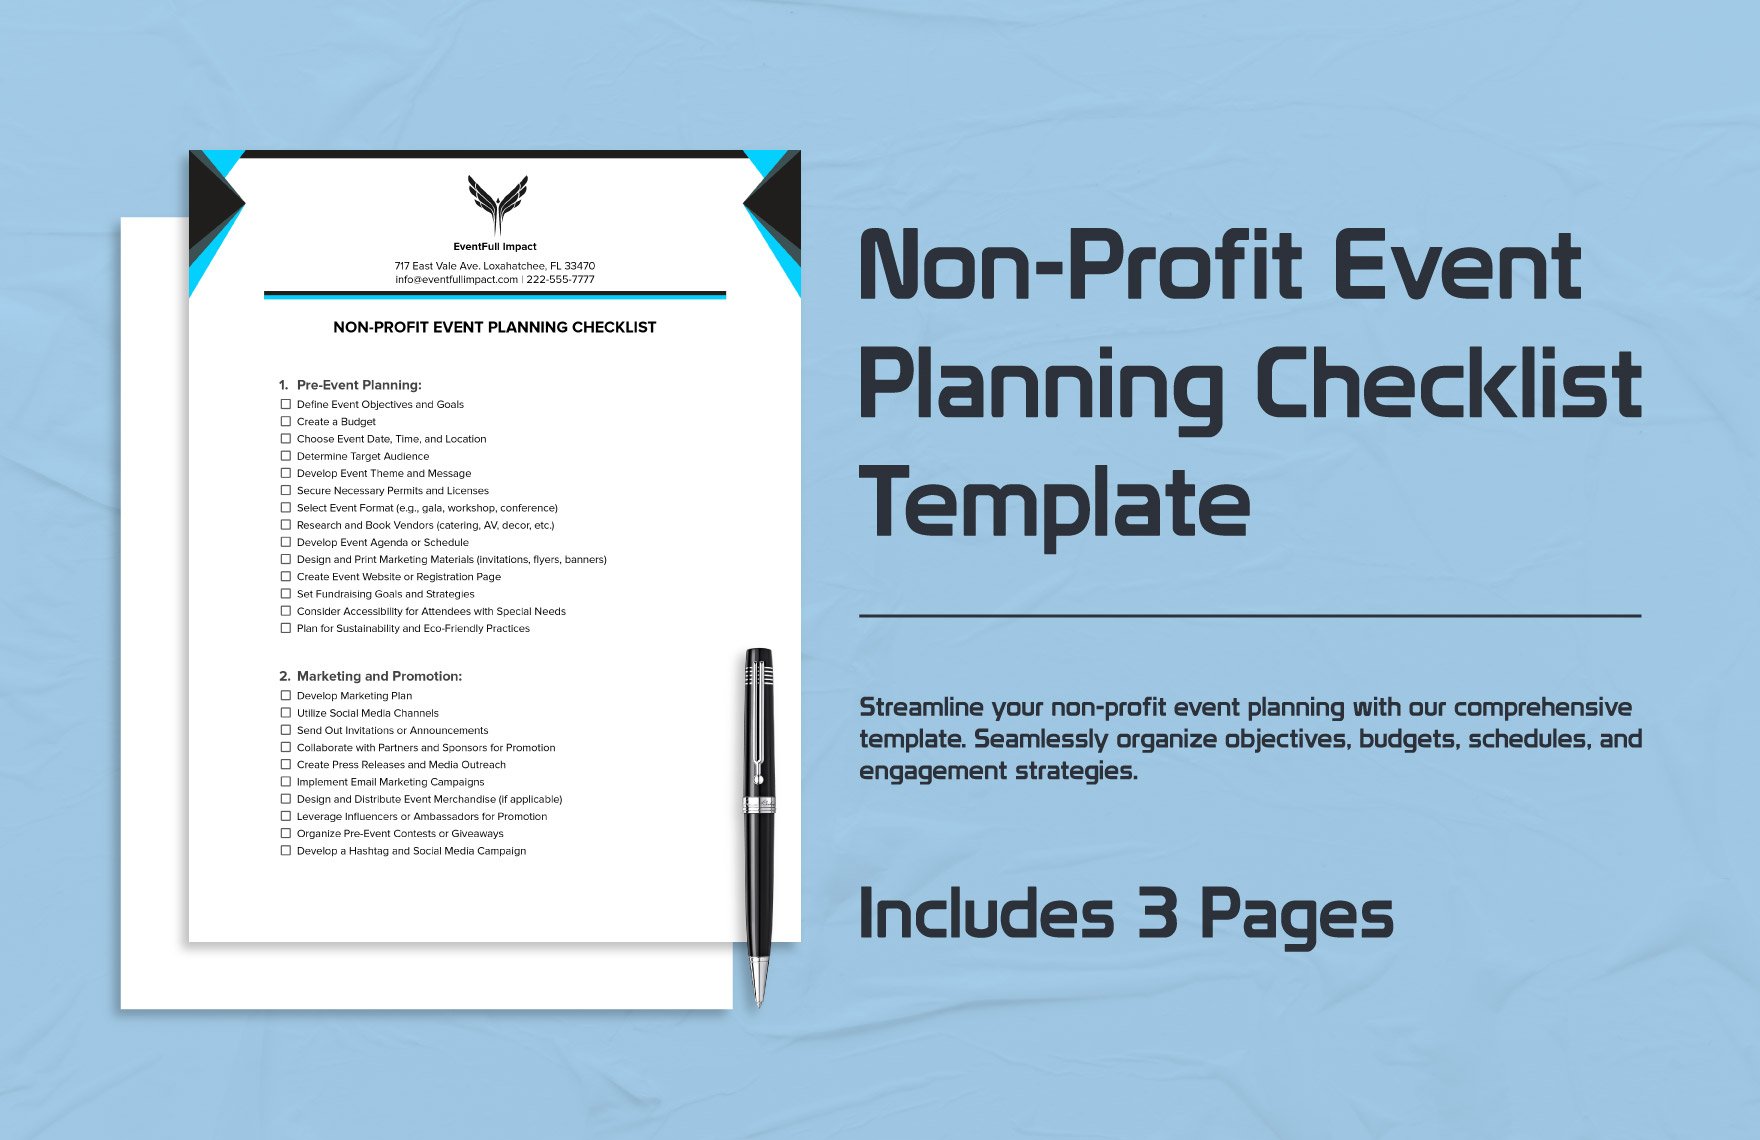 Non-Profit Event Planning Checklist Template